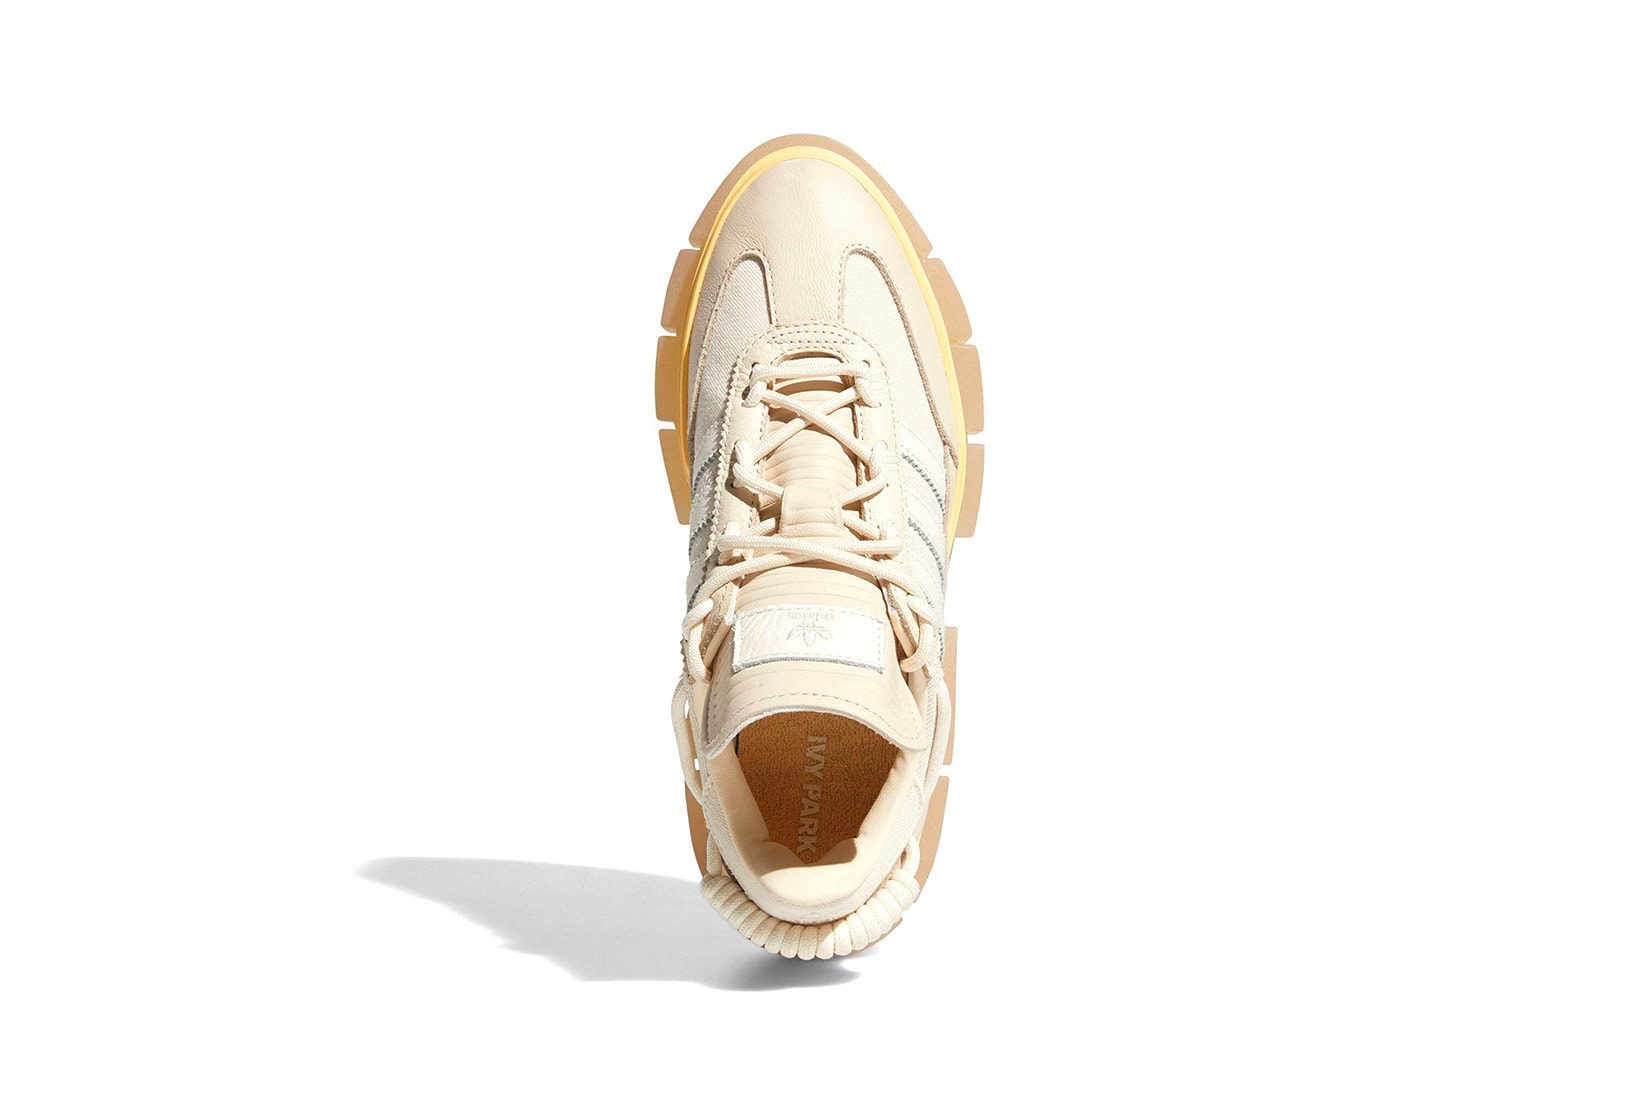 Beyonce IVY PARK adidas Originals Super Super Sleek Sneakers Collaboration Shoes Kicks Footwear Beige